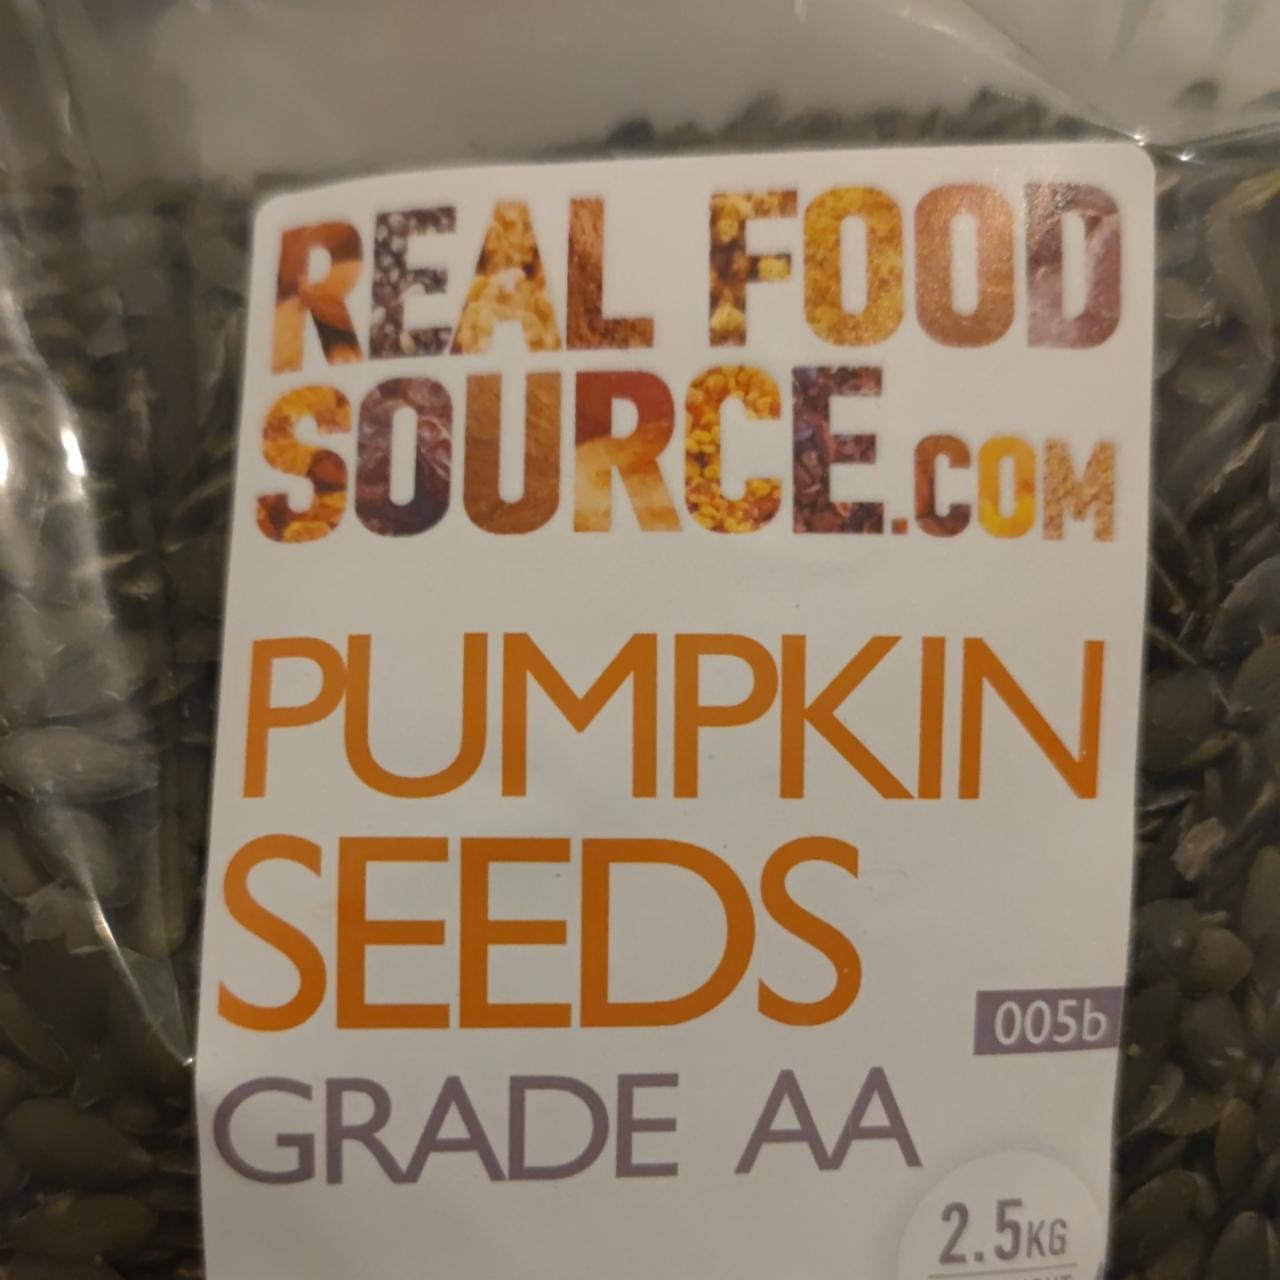 Fotografie - Pumpkin seeds Real food source.com